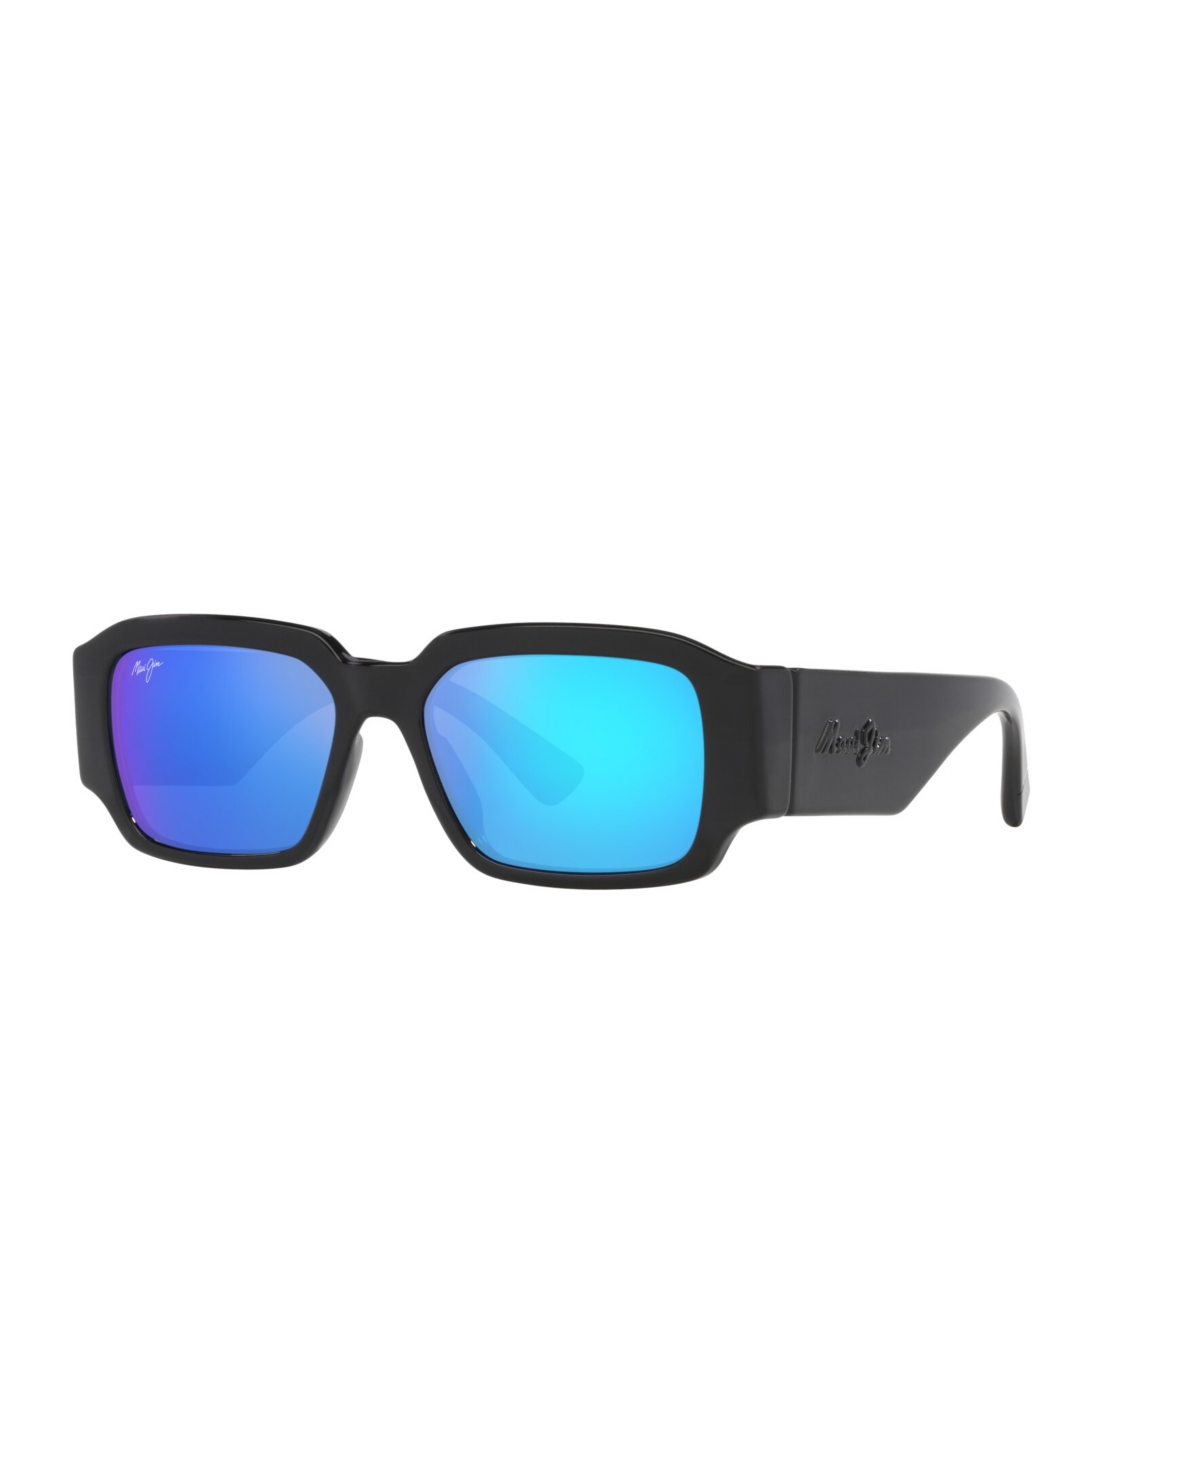 Men's and Women's Polarized Sunglasses, Kupale - Black Shiny